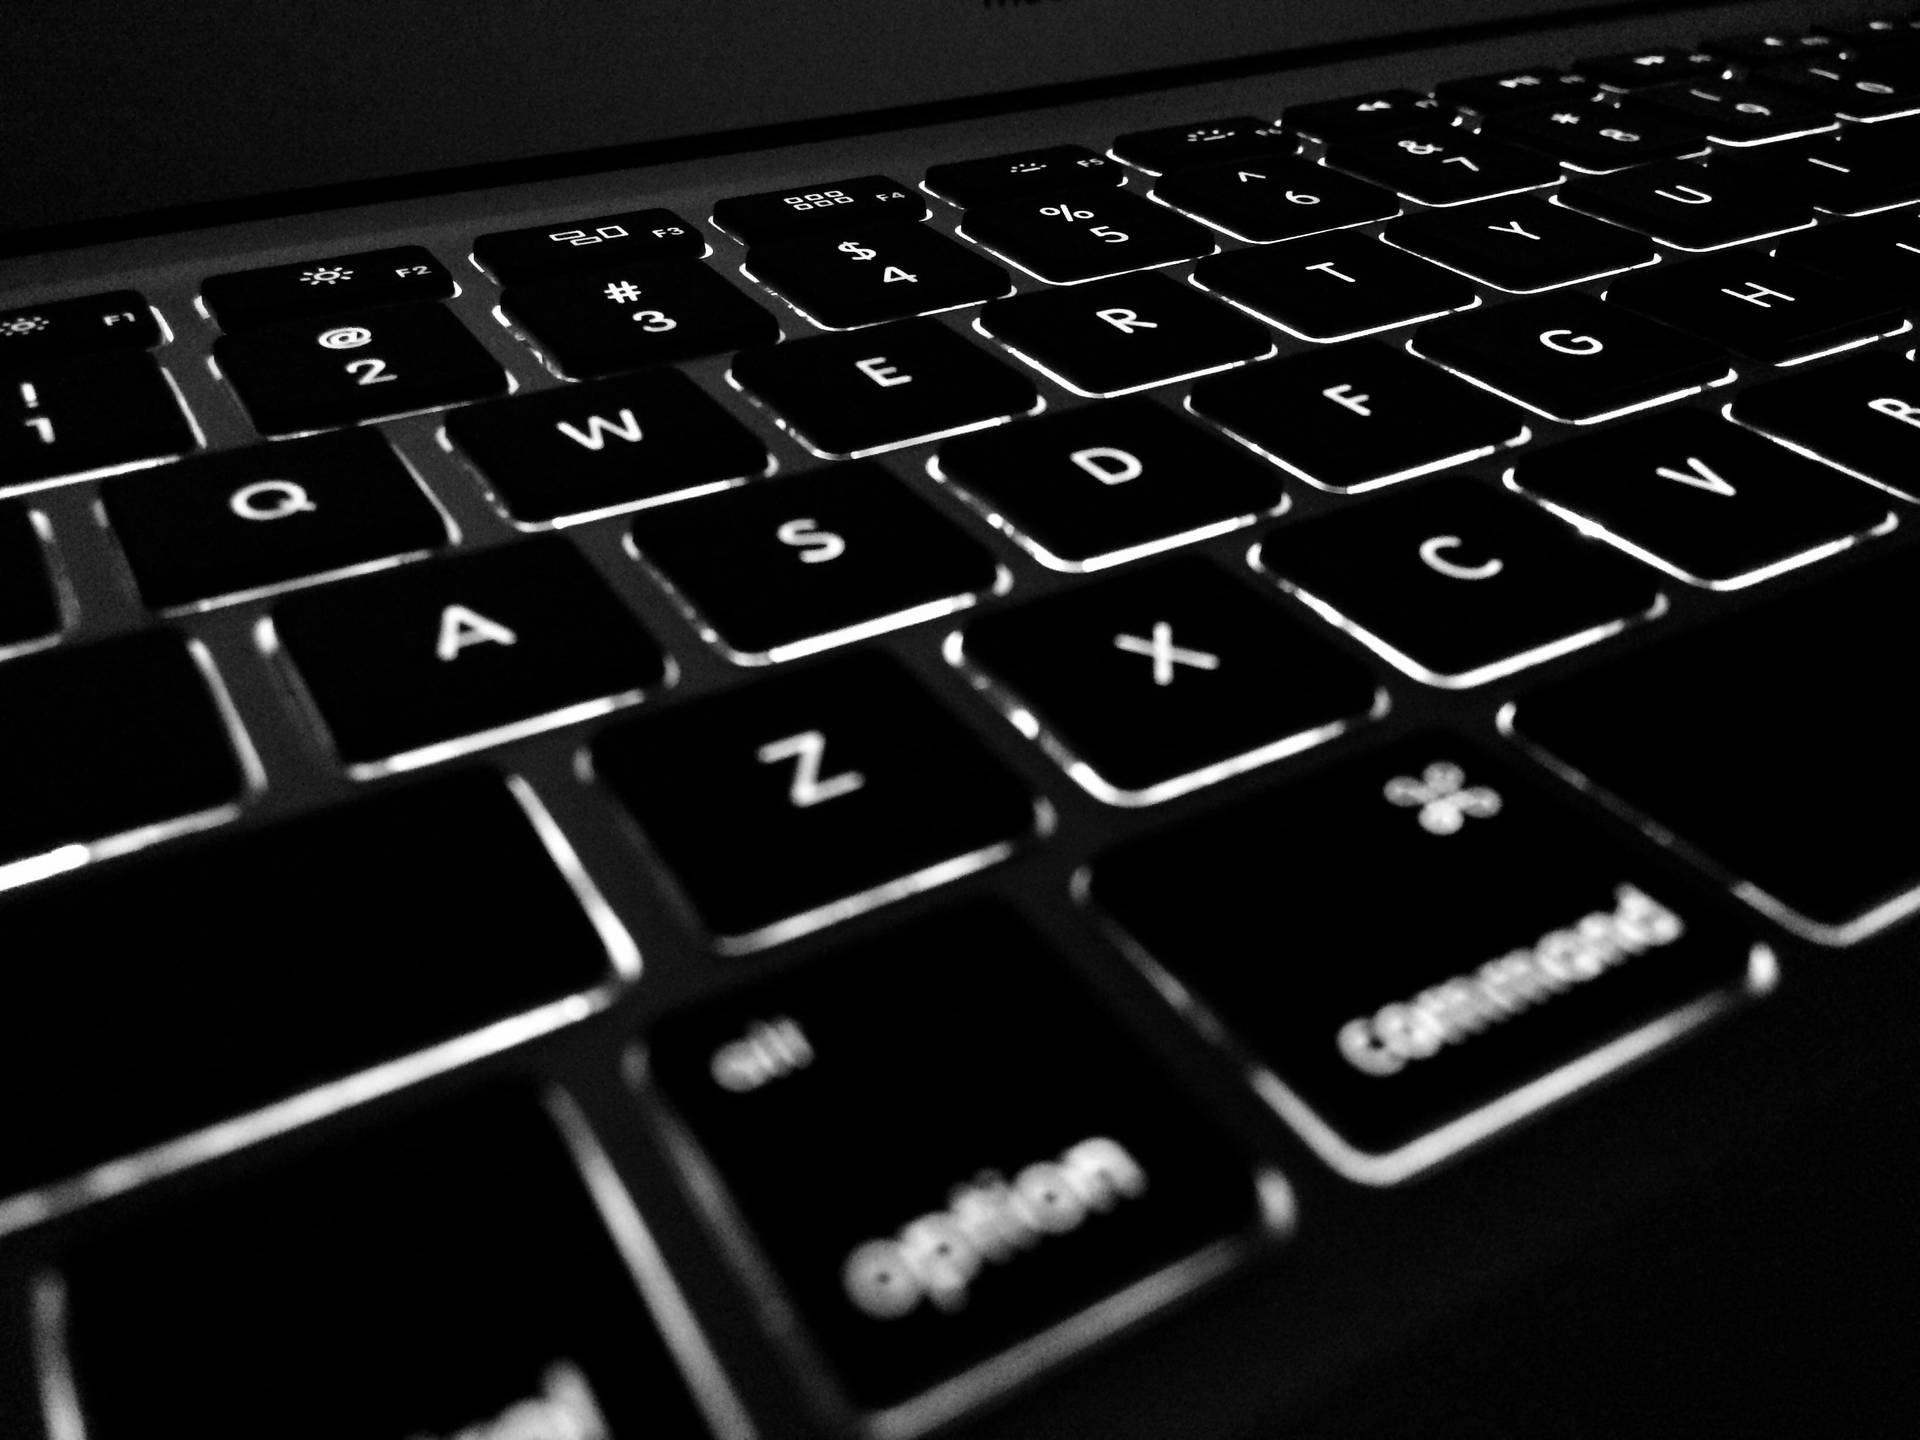 Black Apple Macbook Computer Keyboard Picture